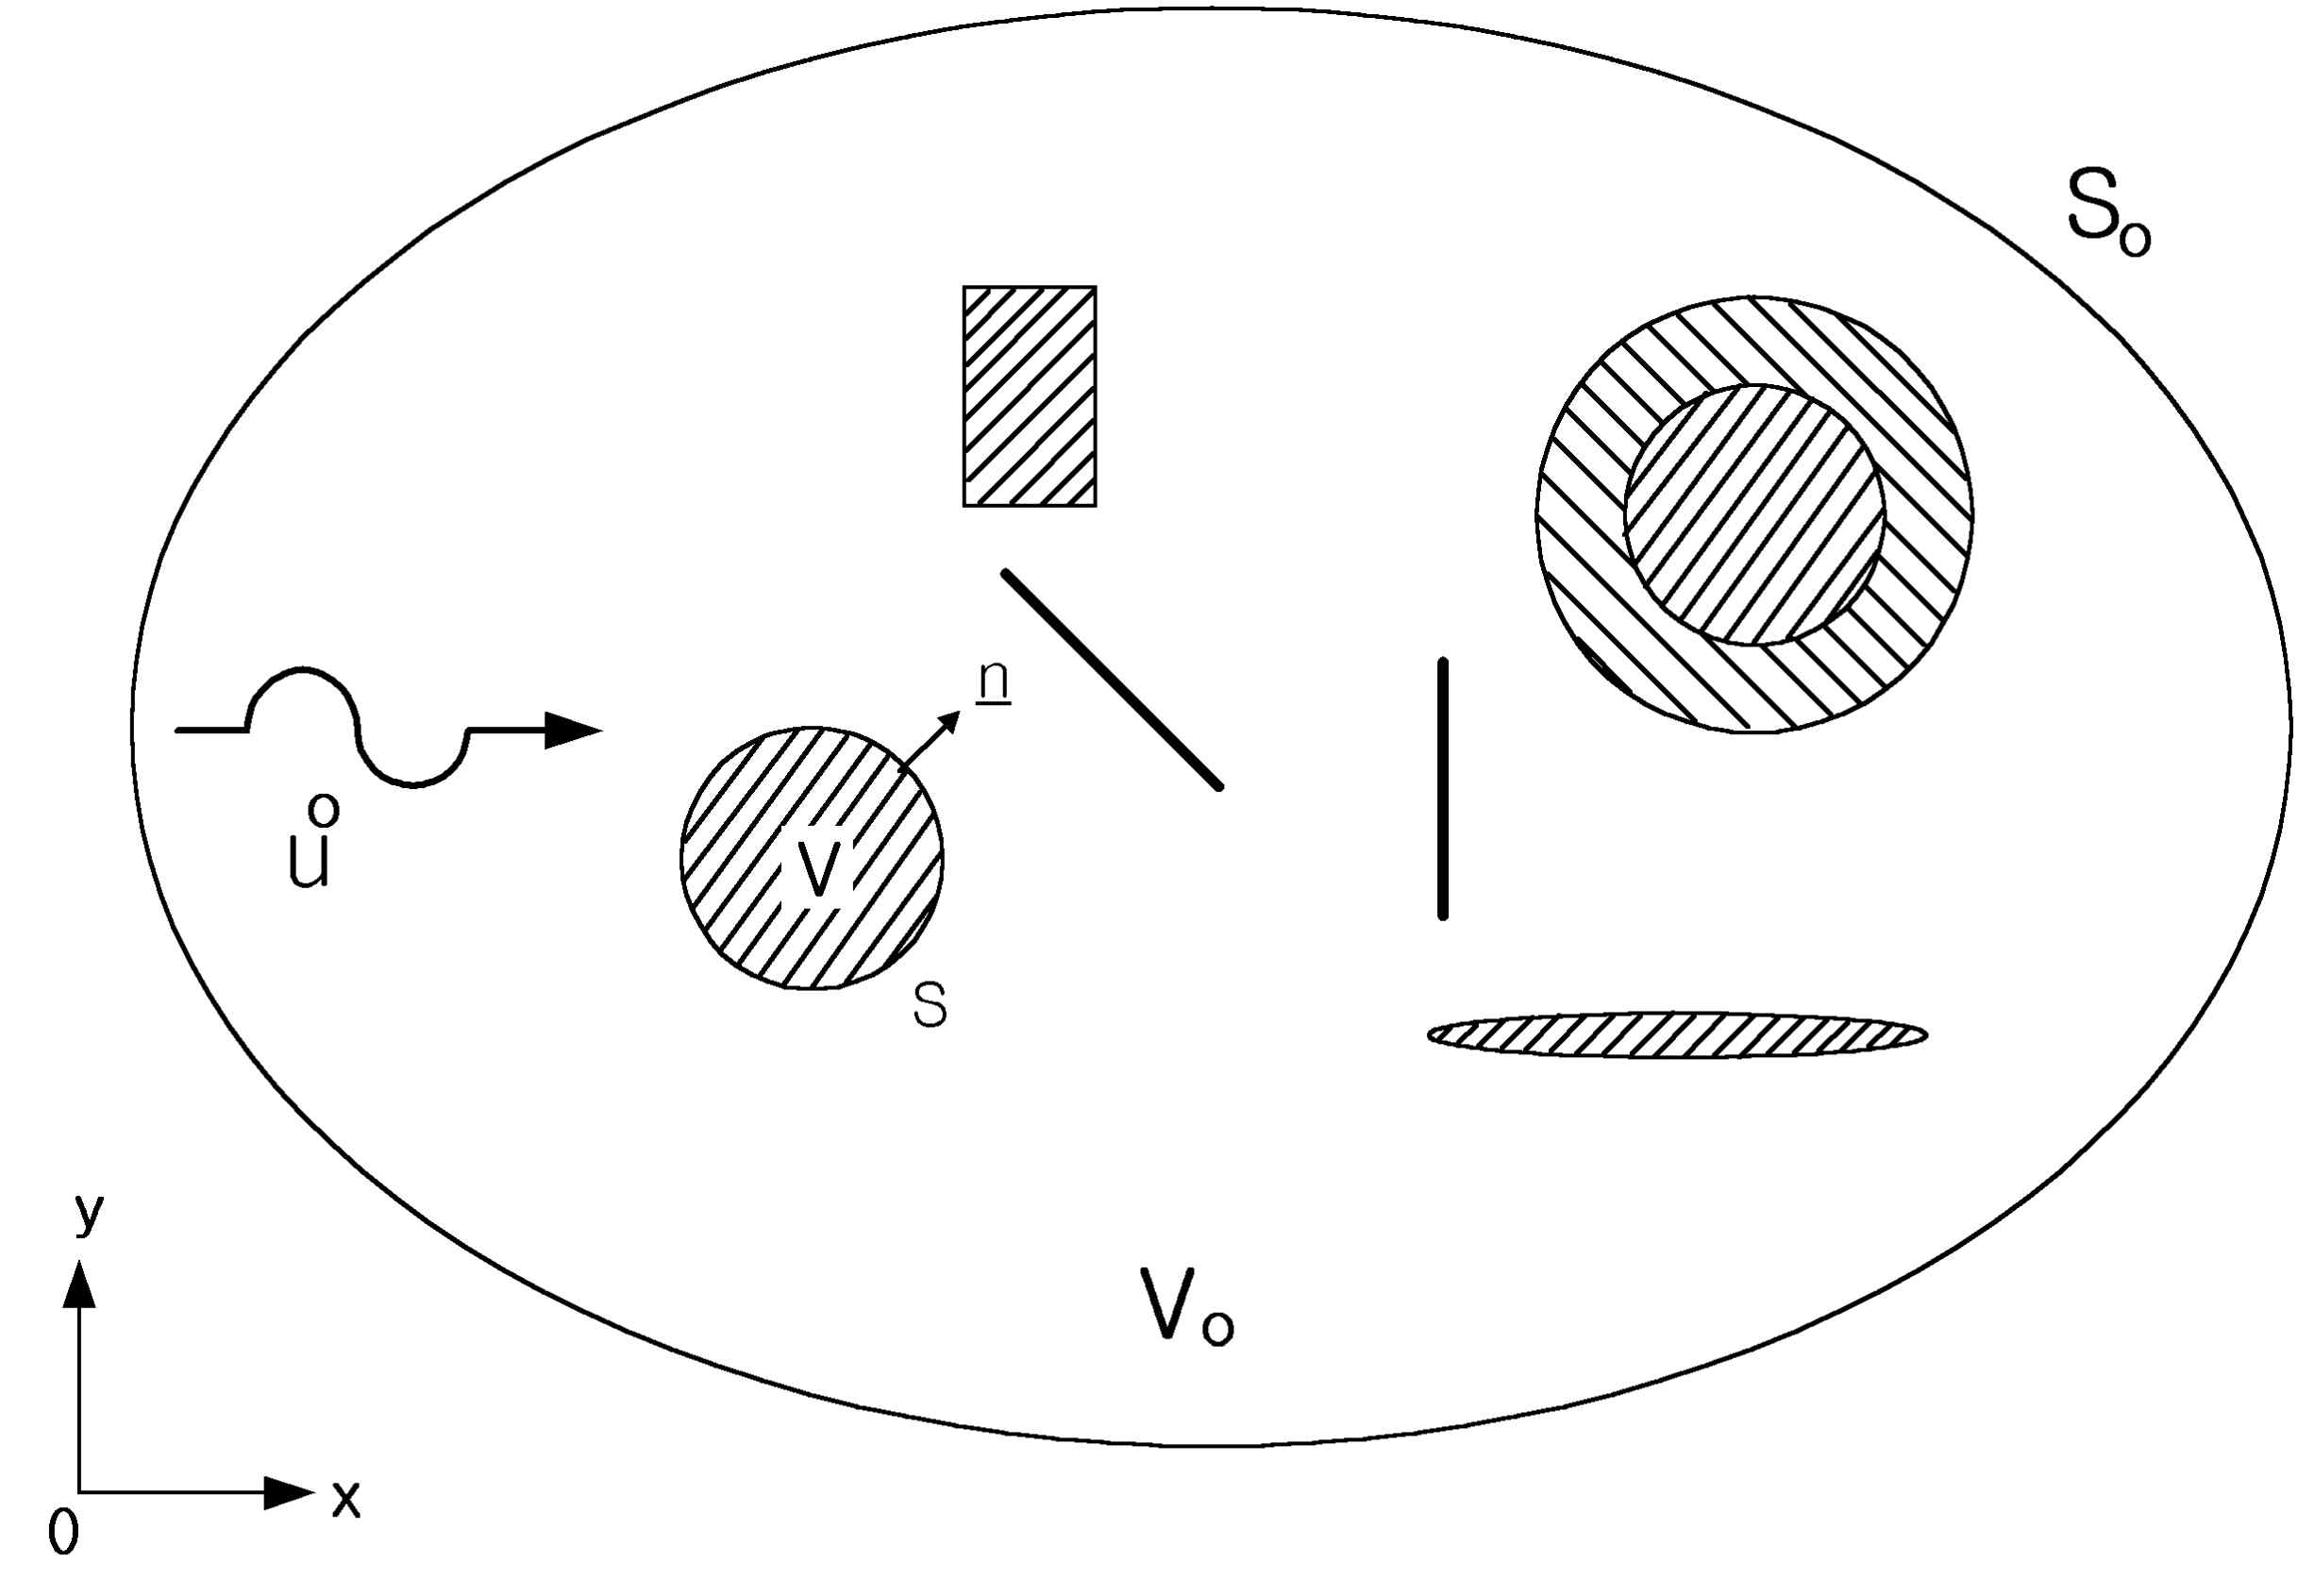 Geometry of the general elastostatic full-plane elastodynamic problem.